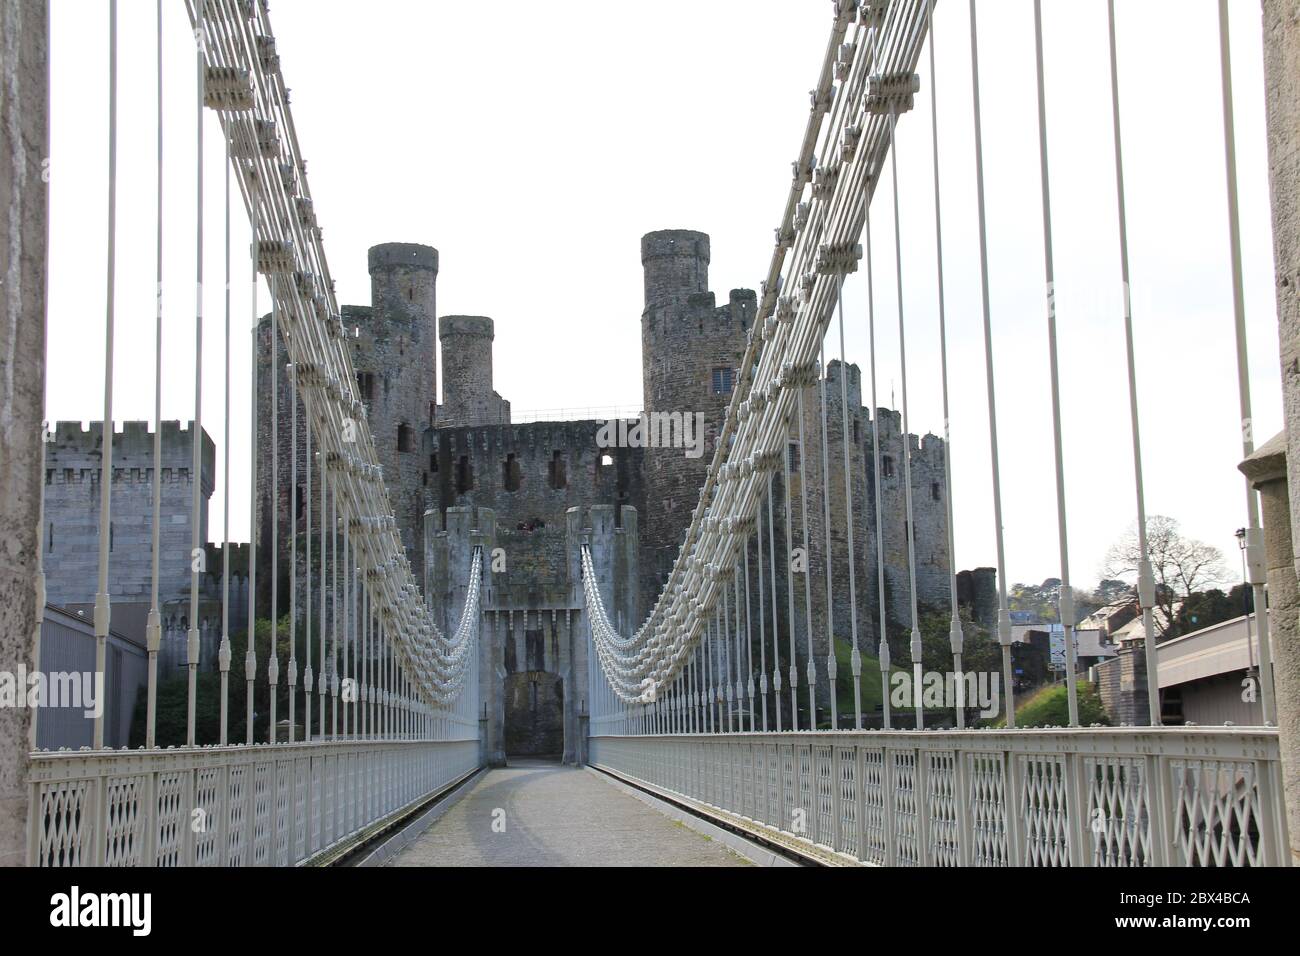 Conwy Suspension Bridge in North-Wales. United Kingdom Stock Photo